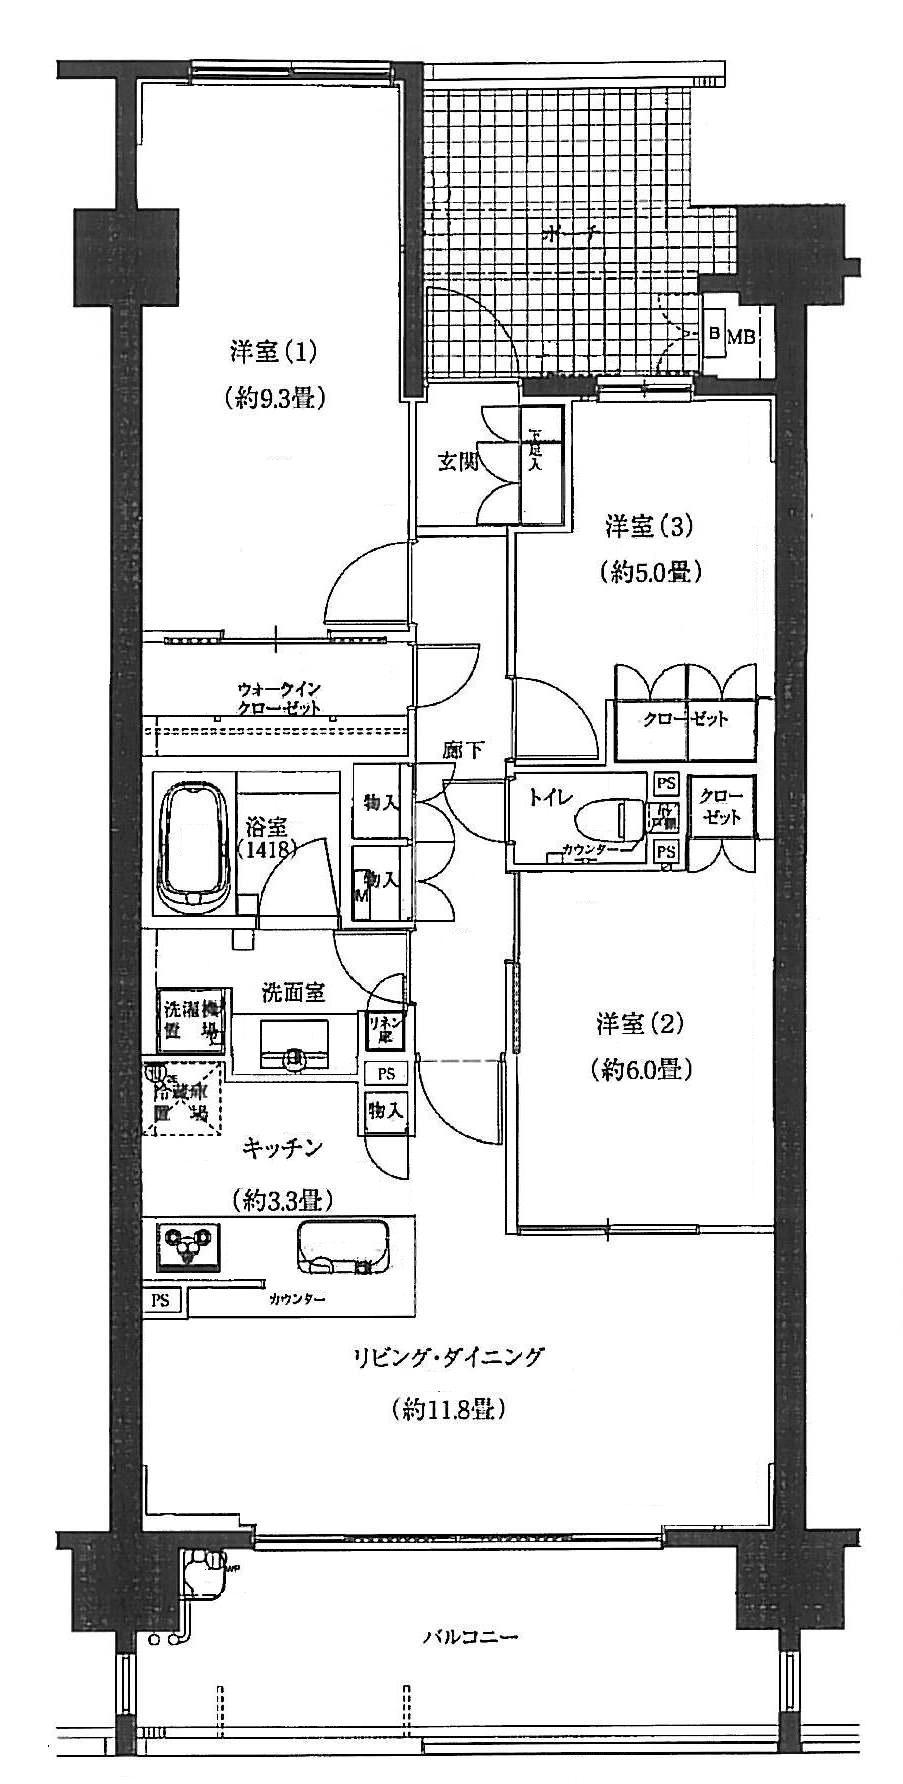 Floor plan. 3LDK, Price 34,800,000 yen, Footprint 80.2 sq m , Balcony area 12.8 sq m